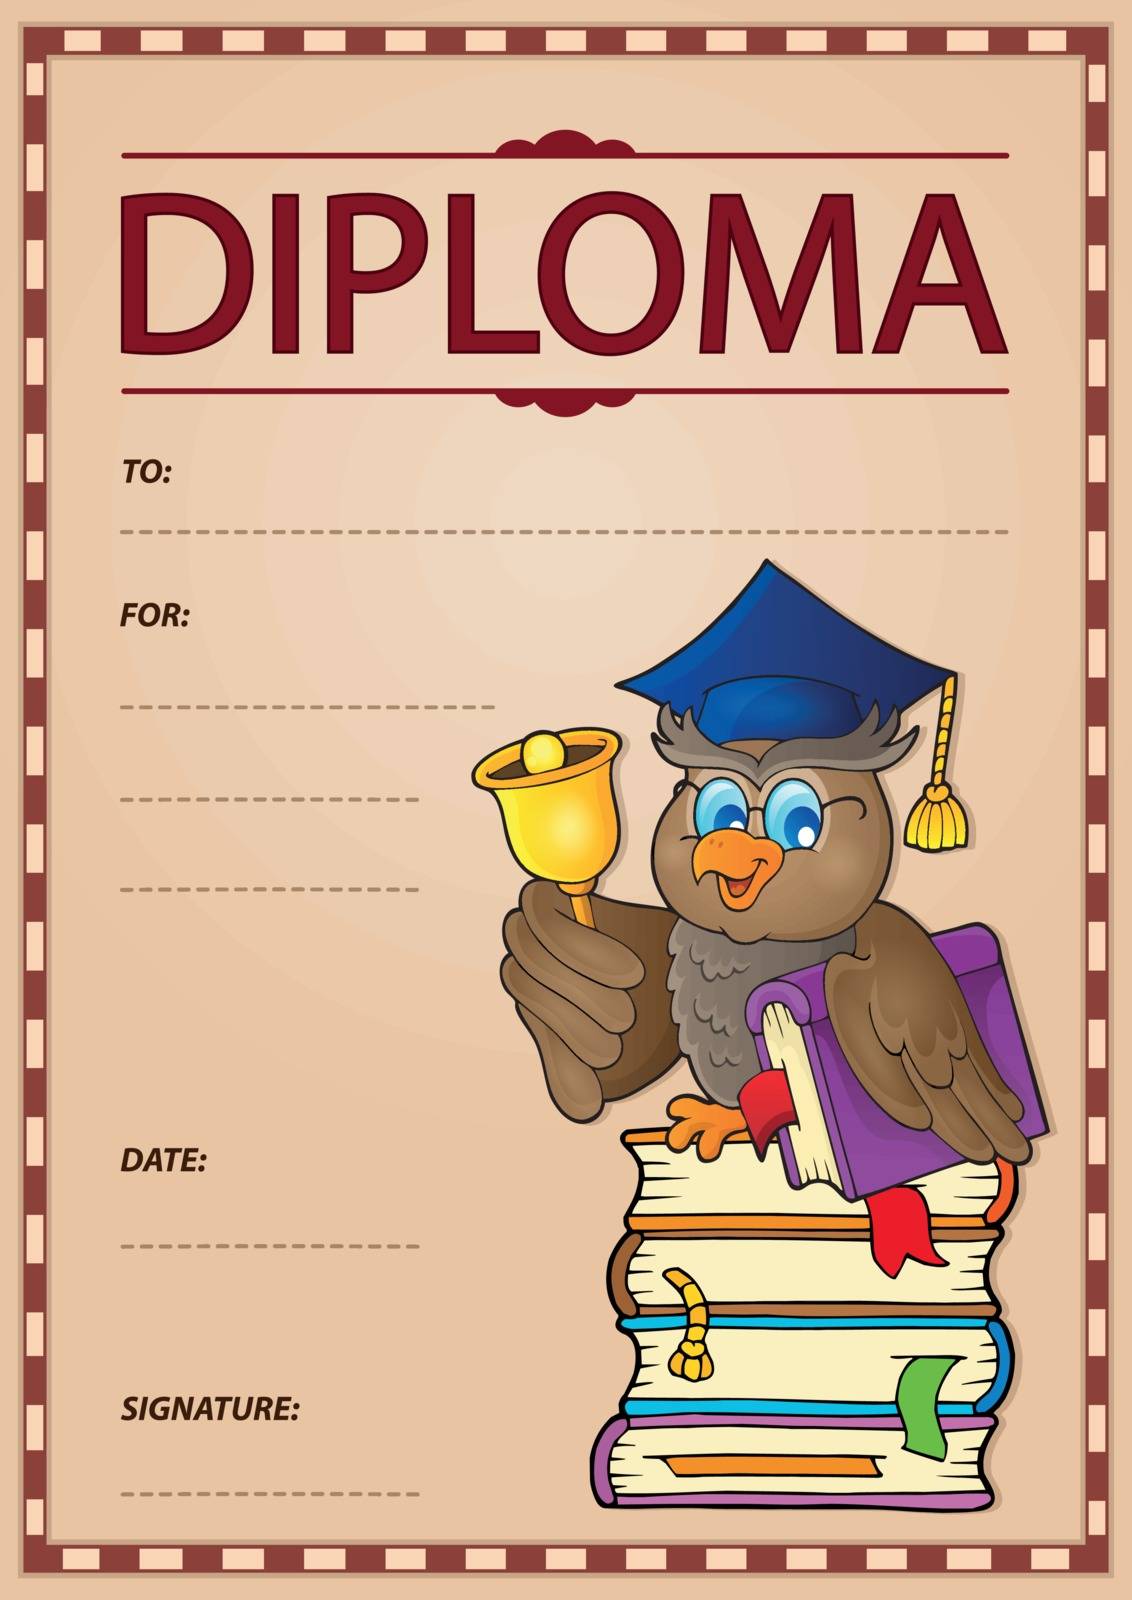 Diploma subject image 9 - eps10 vector illustration.